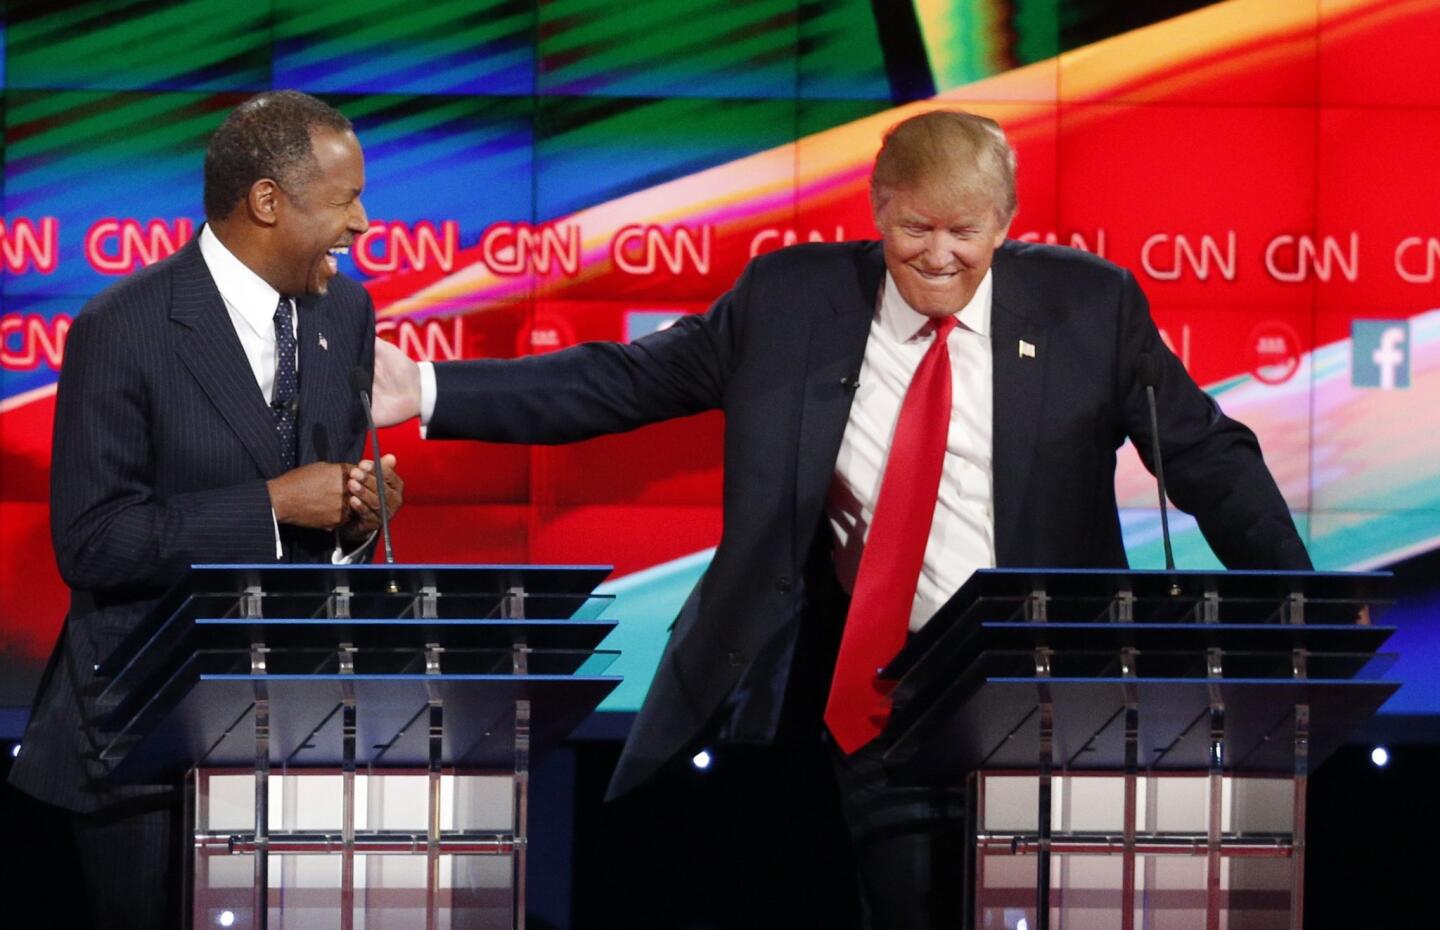 Ben Carson, left, and Donald Trump laugh during the Republican presidential debate at the Venetian Hotel & Casino in Las Vegas.